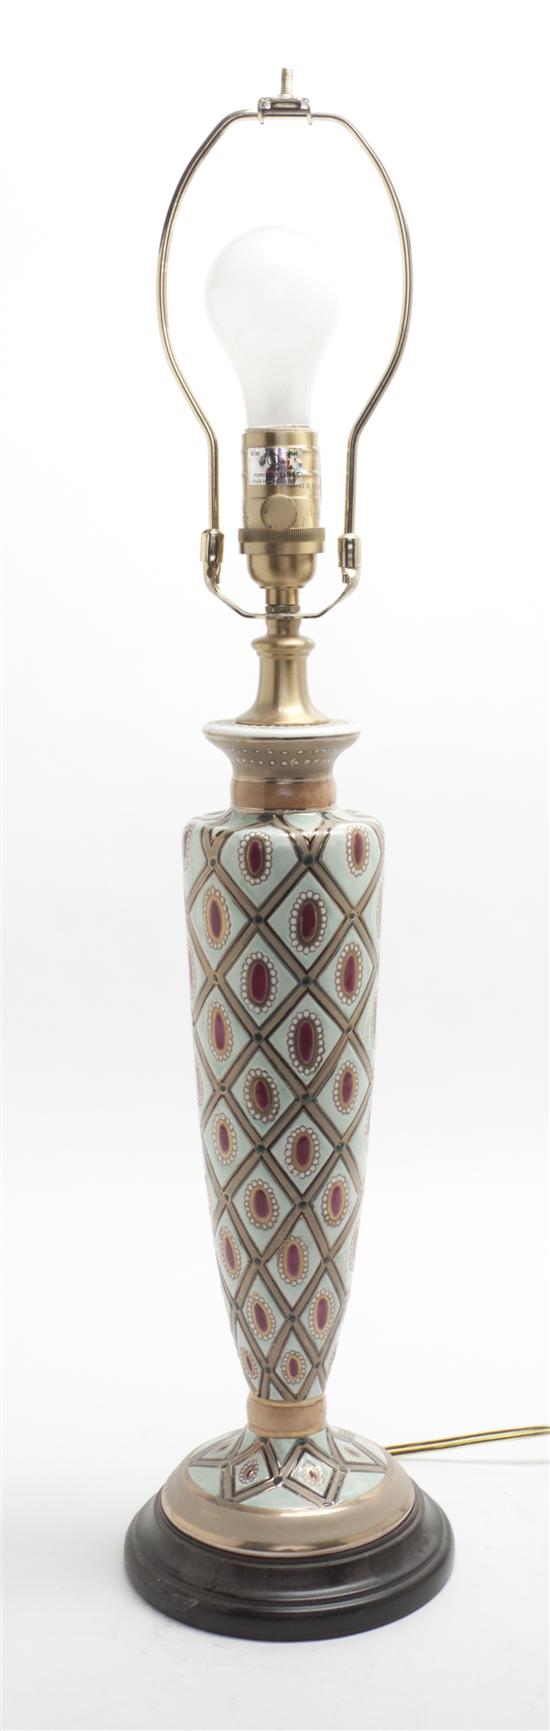 A Polychrome Decorated Ceramic Vase